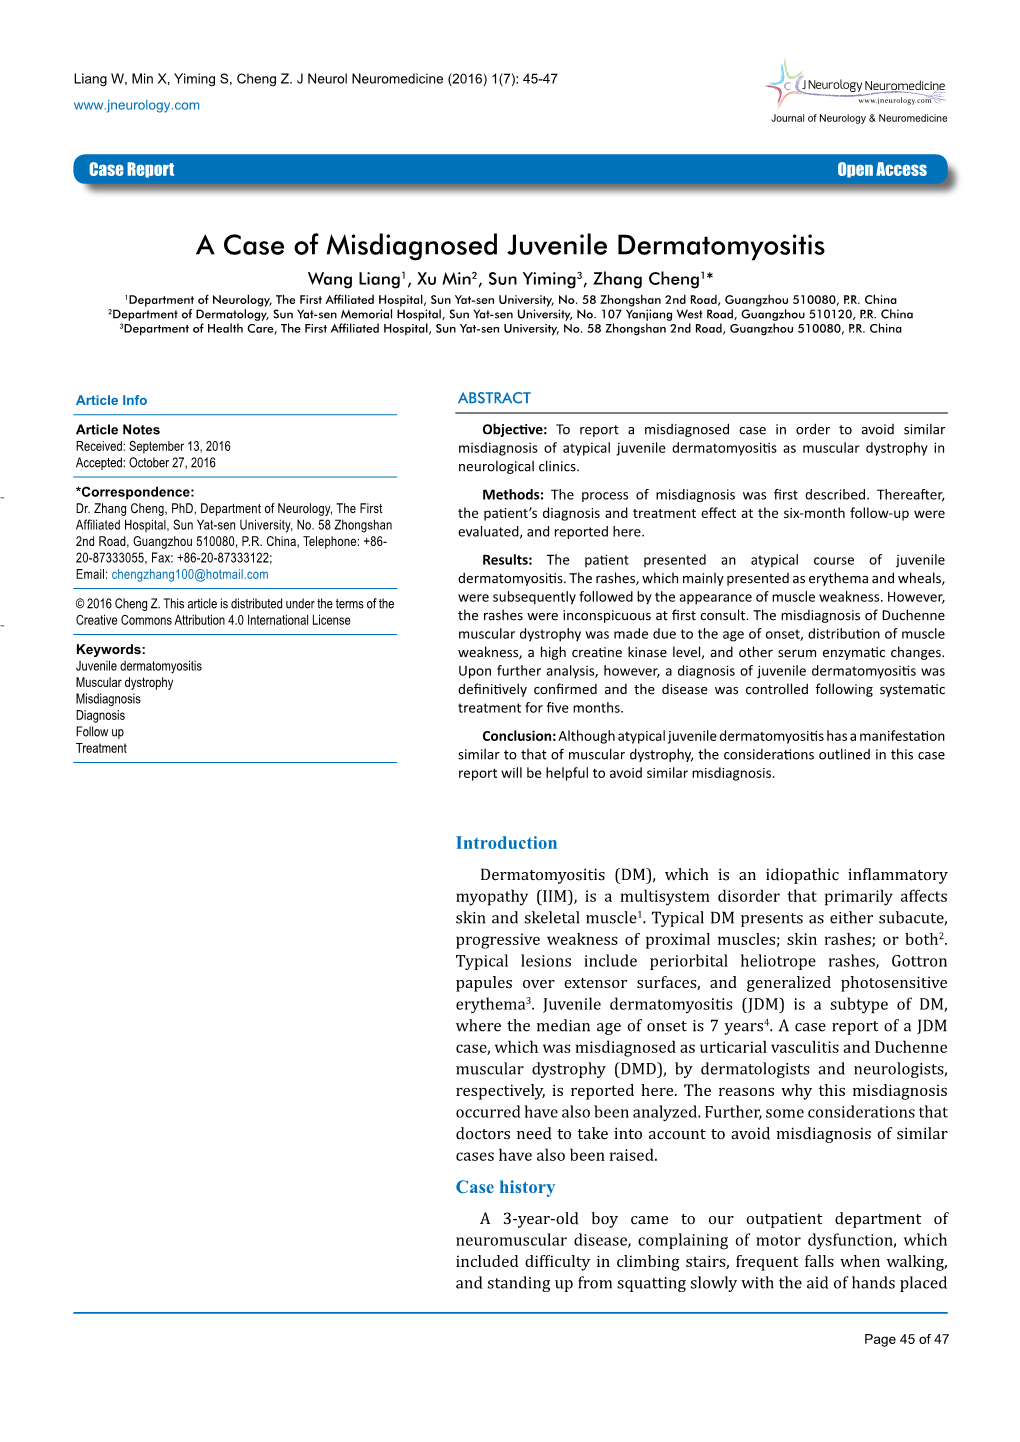 A Case of Misdiagnosed Juvenile Dermatomyositis